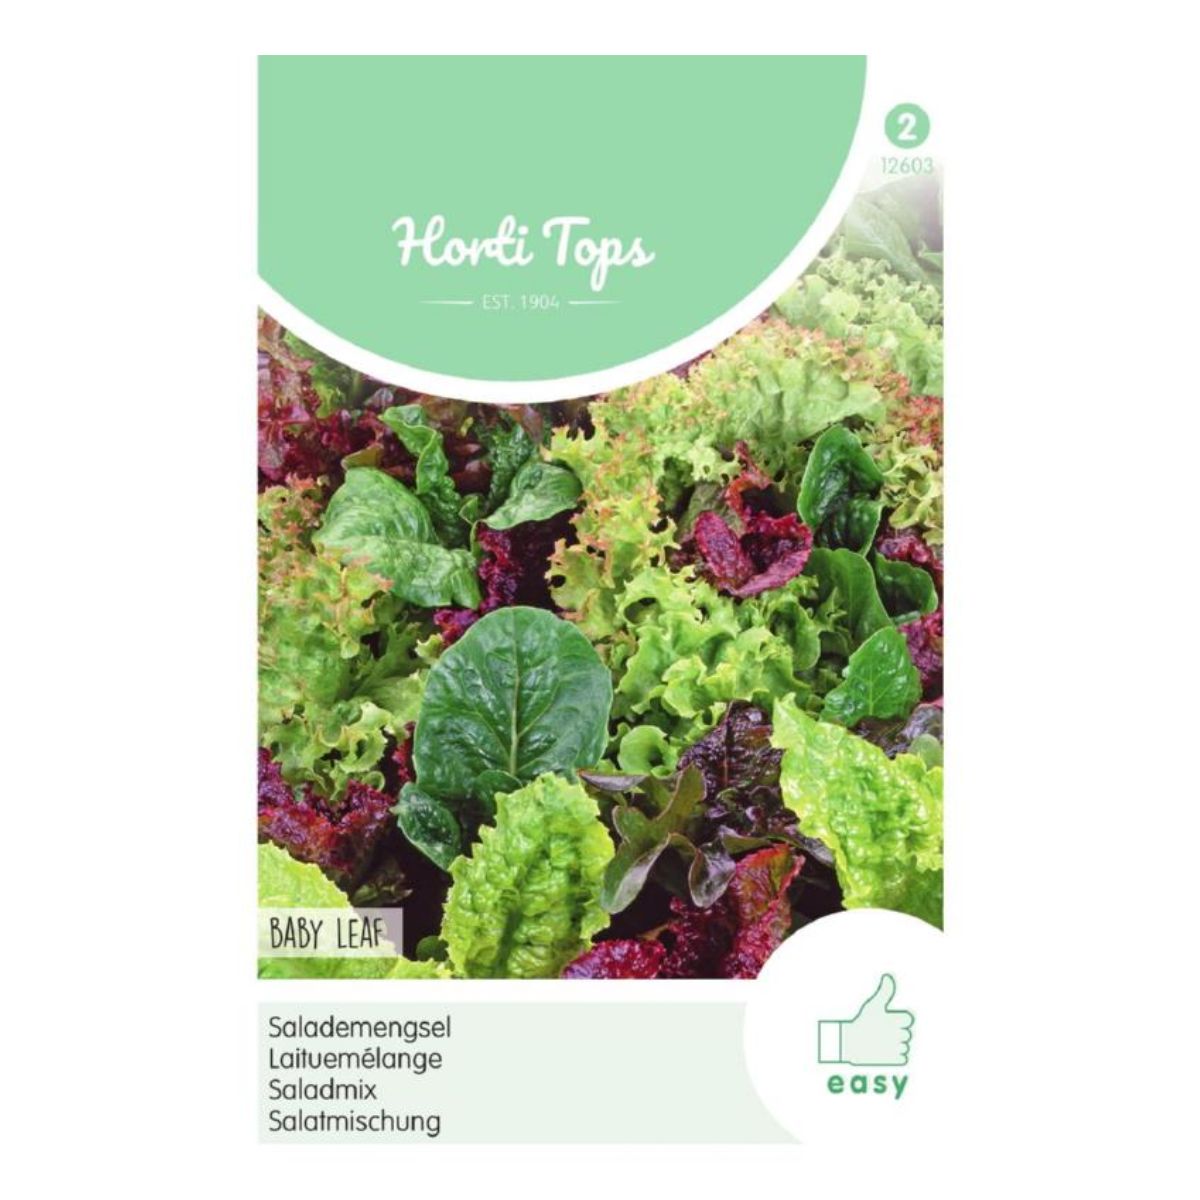 Salata - Seminte de salata MIX, 3 grame, Hortitops, hectarul.ro